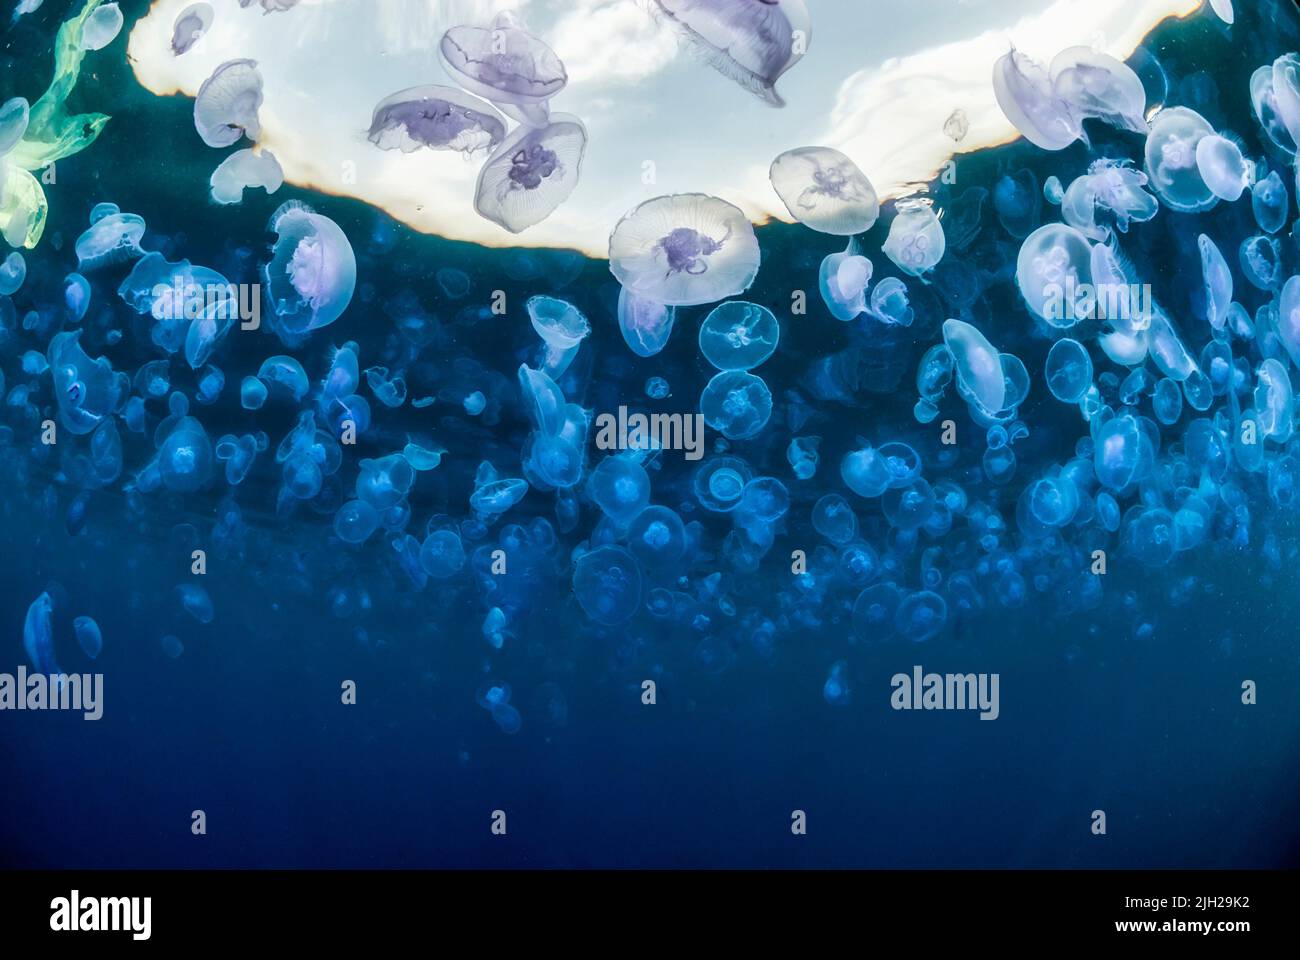 Underwater image of a big concentration of jellyfish aurelia aurita Stock Photo